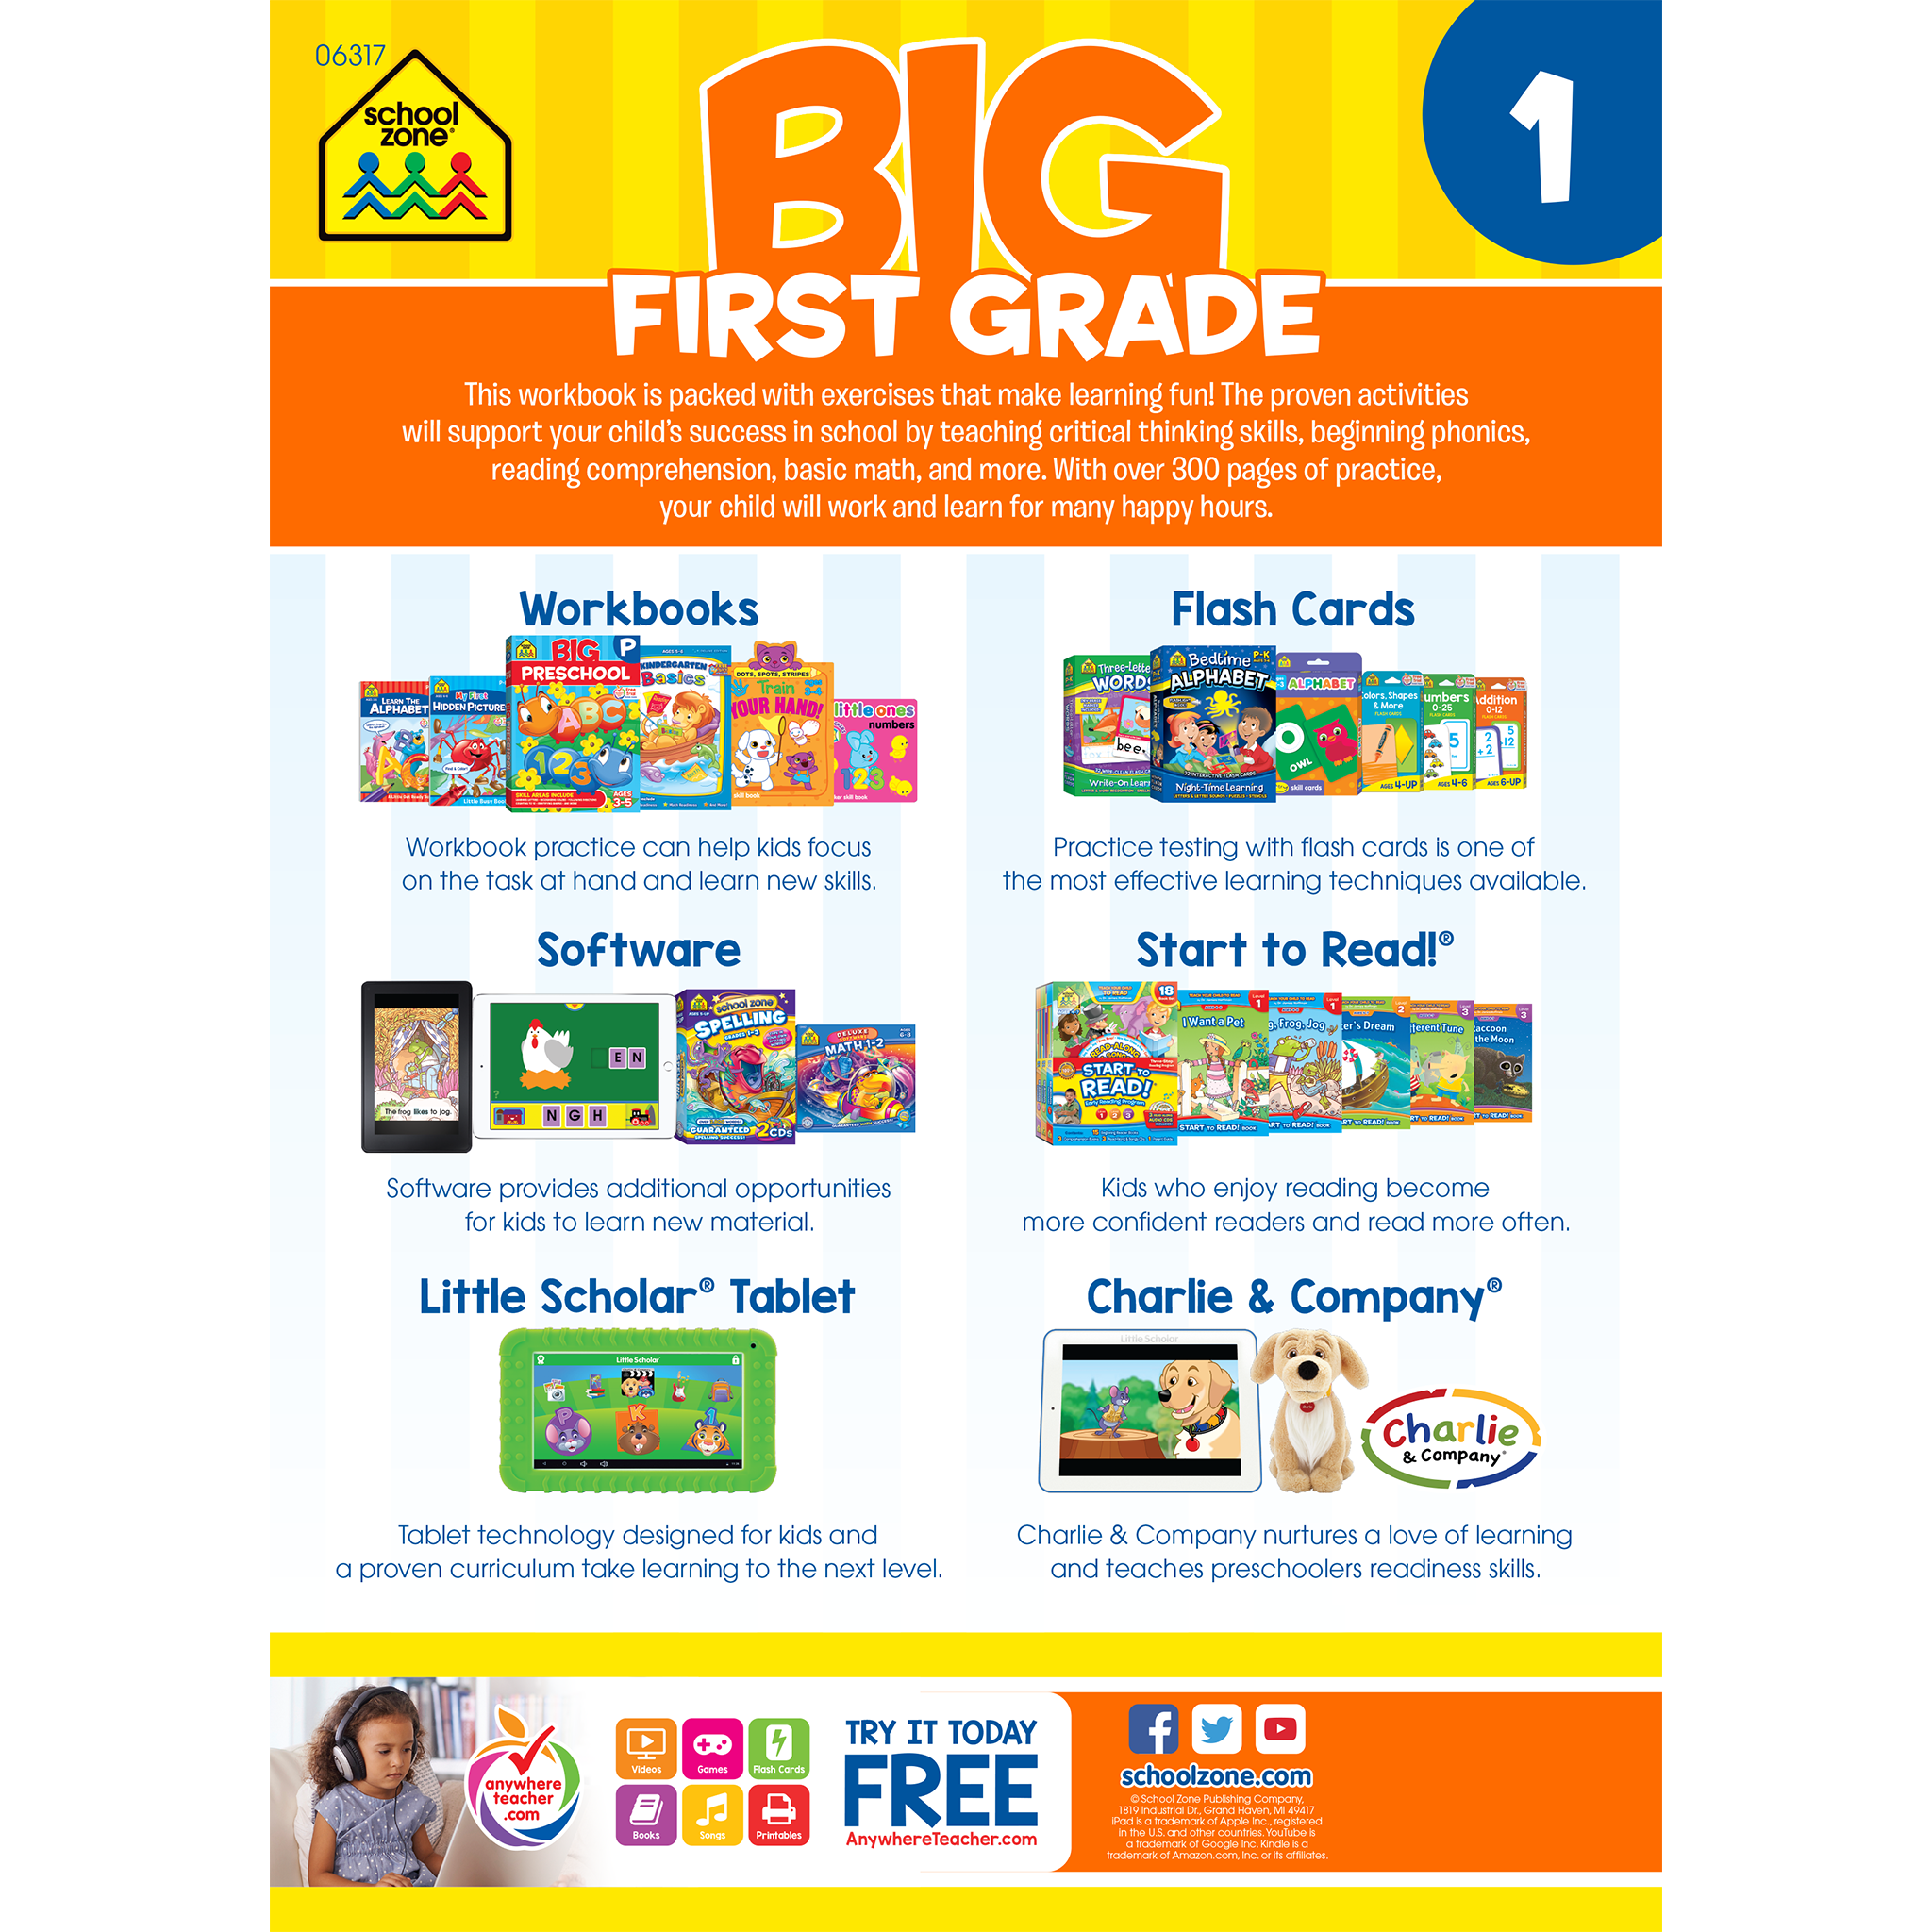 Big First Grade - image 2 of 2